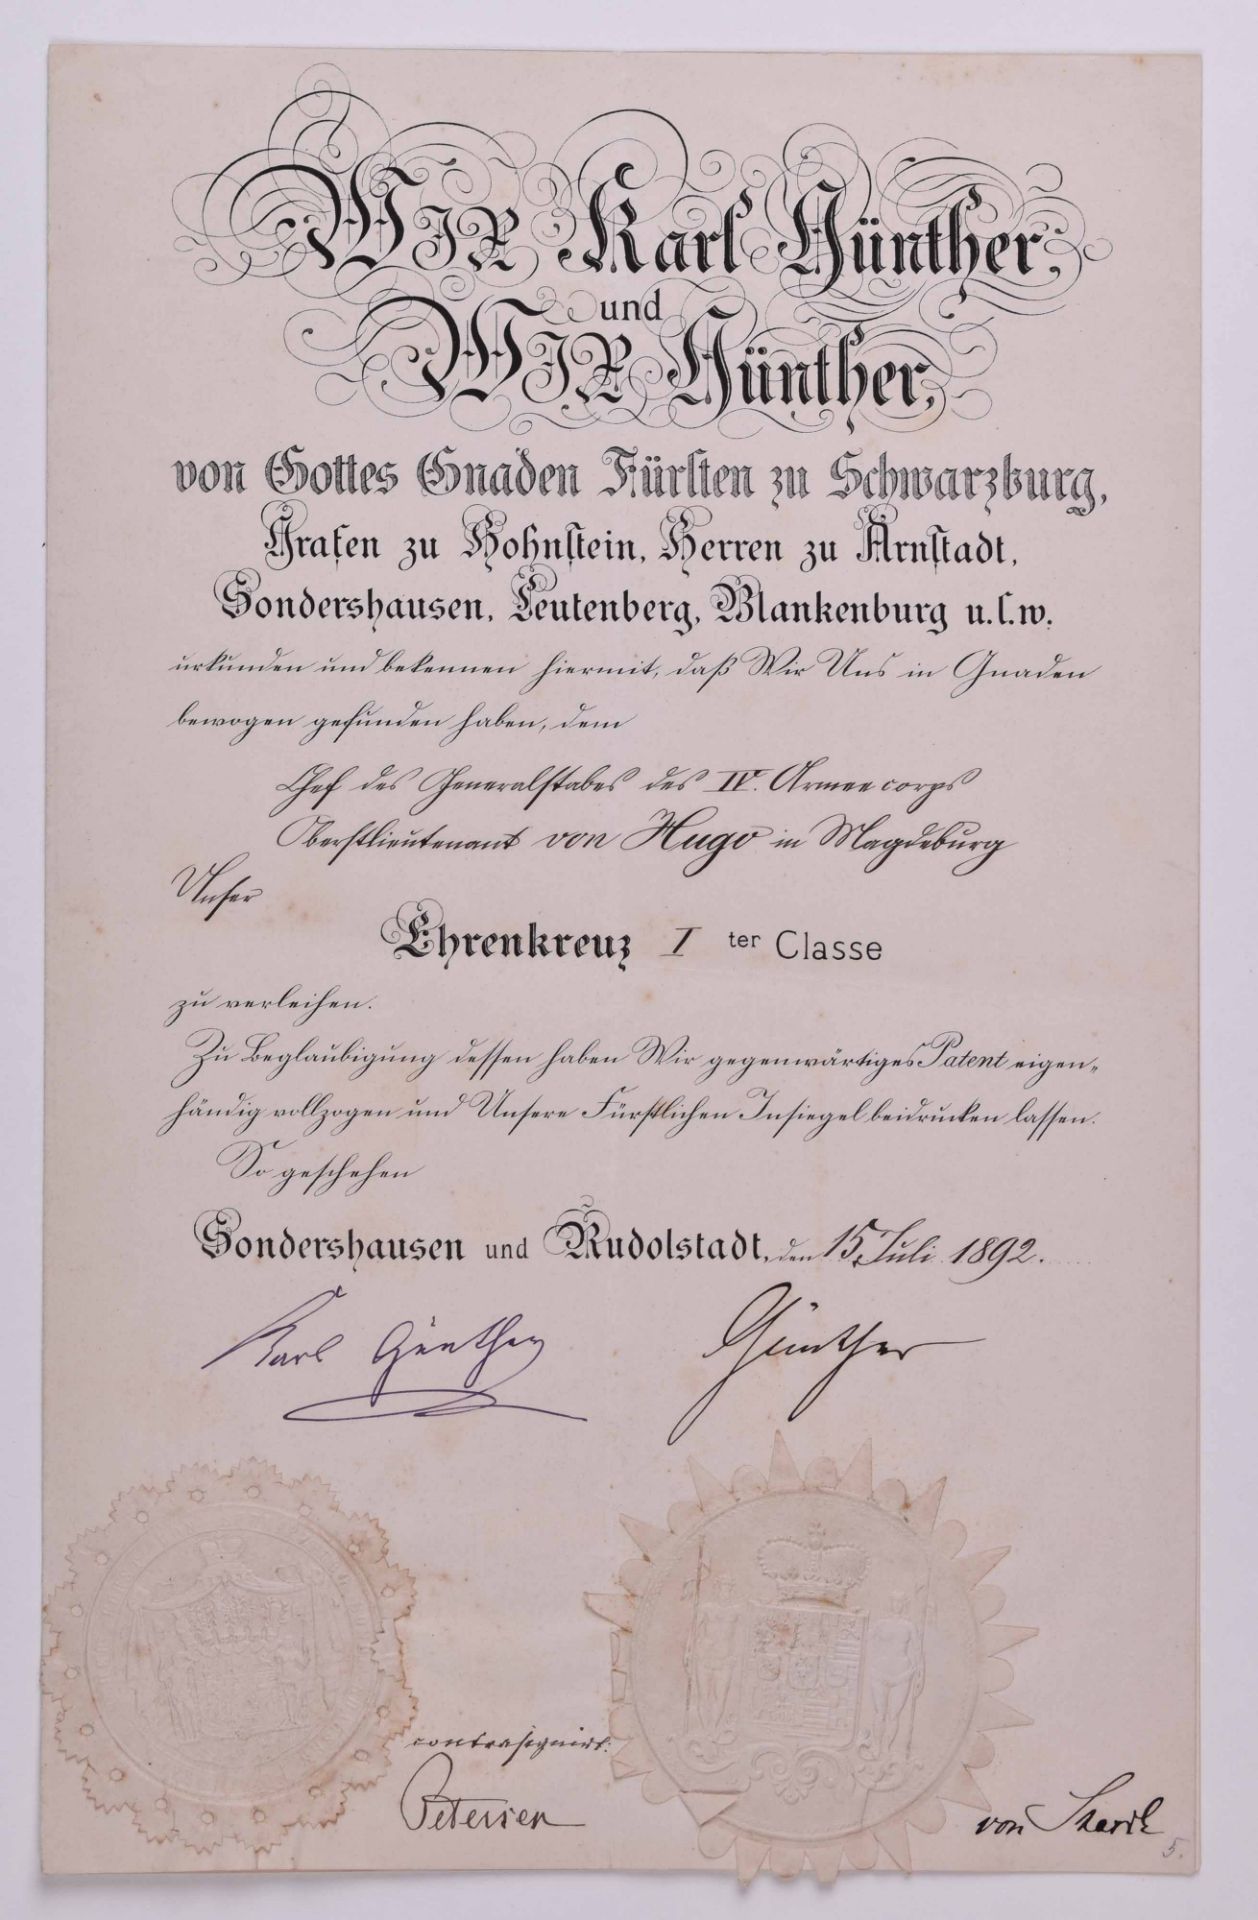 Verleihungsurkunde Ehrenkreuz I. Klasse vom 15.07.1892Verleihungsurkunde Ehrenkreuz 1. Klasse für